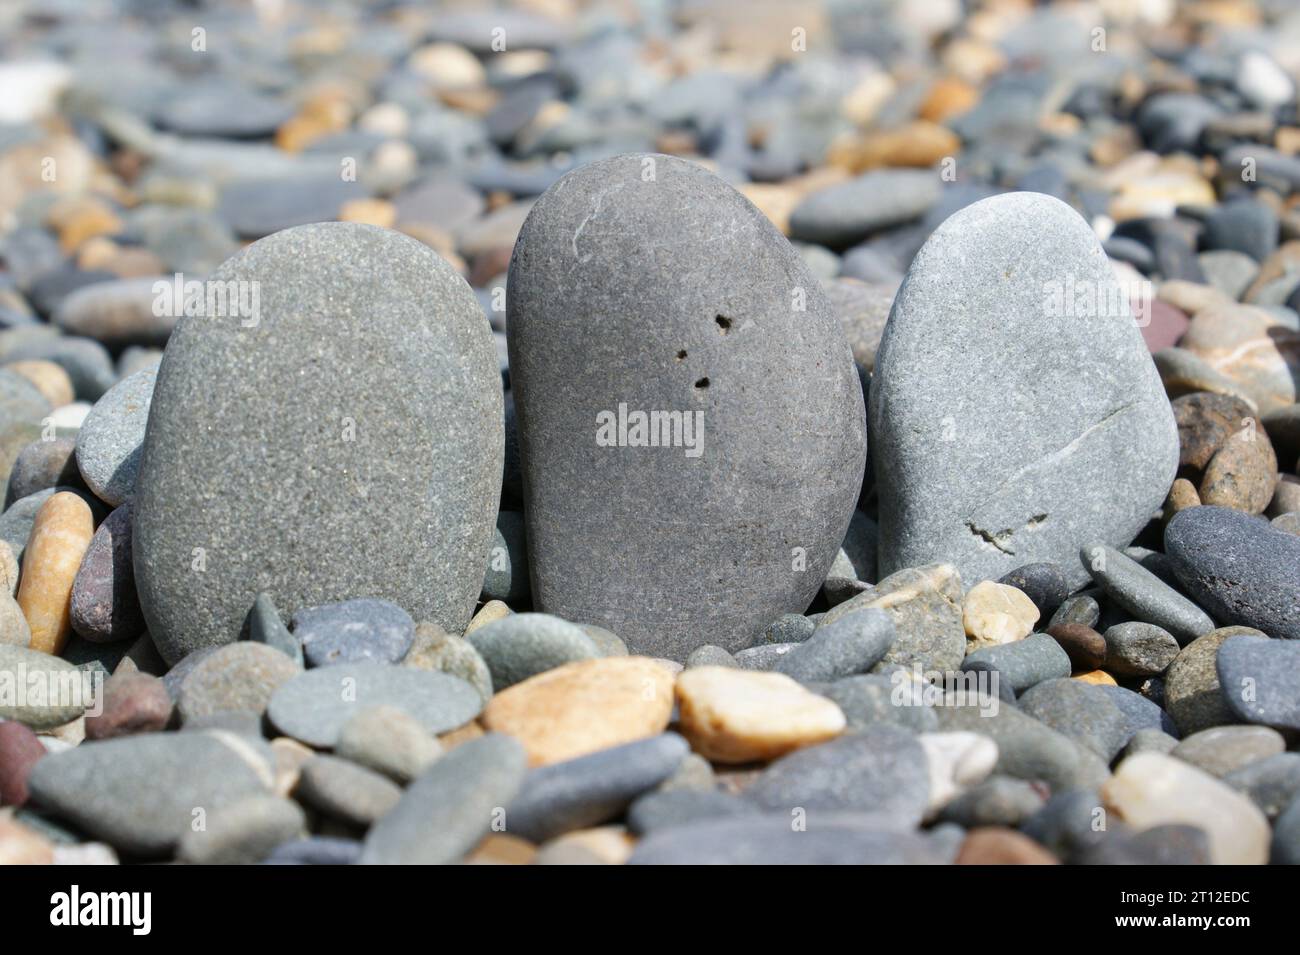 Three stones on a stony beach in a sunny day. Various pebbles and stones. Stock Photo